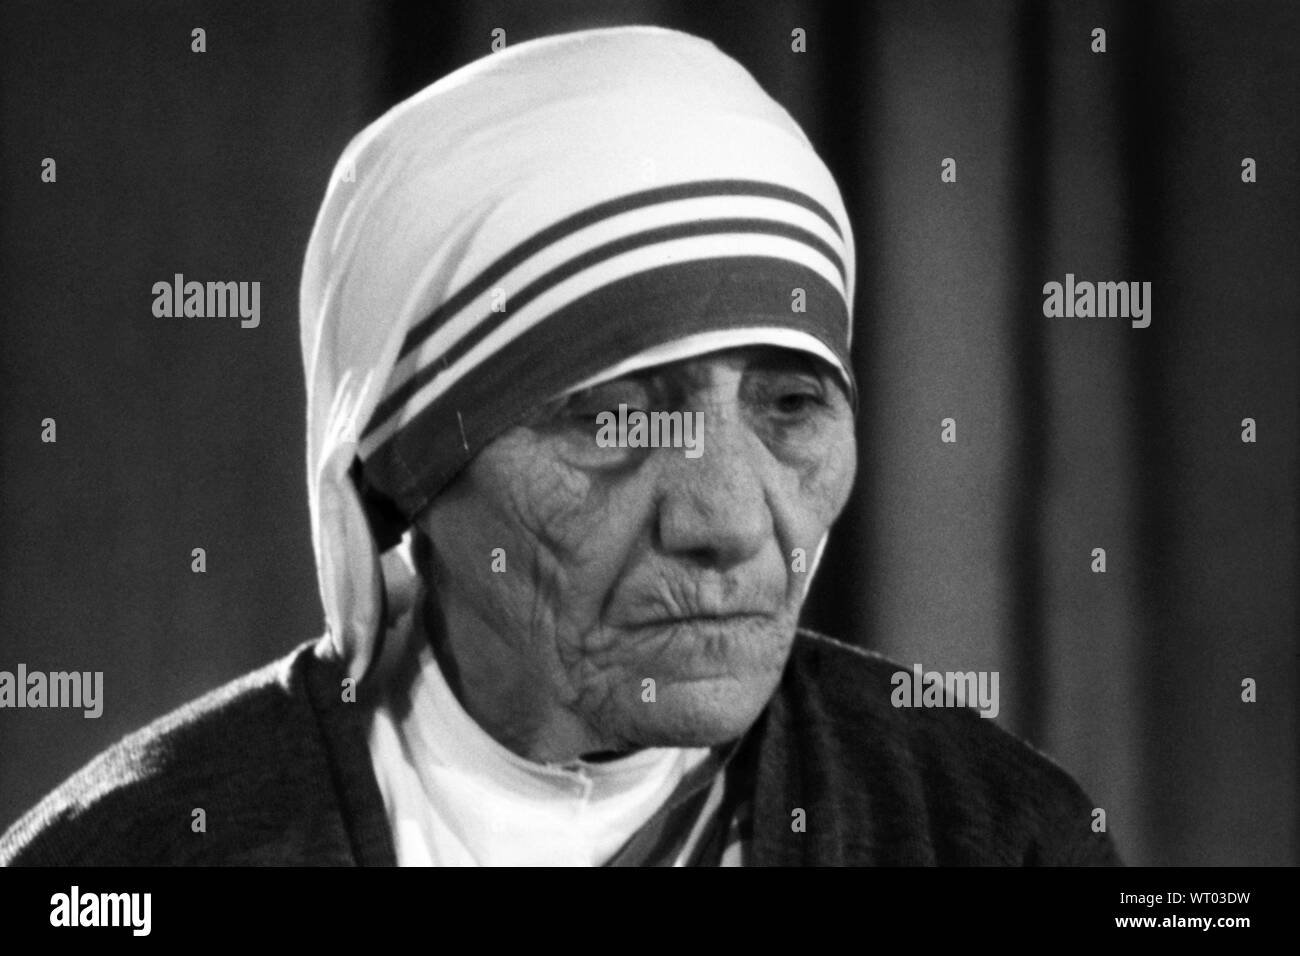 Mother Teresa (Anjezë Gonxhe Bojaxhiu), Albanian-born Roman Catholic nun, Calcutta missionary, and founder of the Missionaries of Charity. Photo by Bernard Gotfryd, 1971. Stock Photo